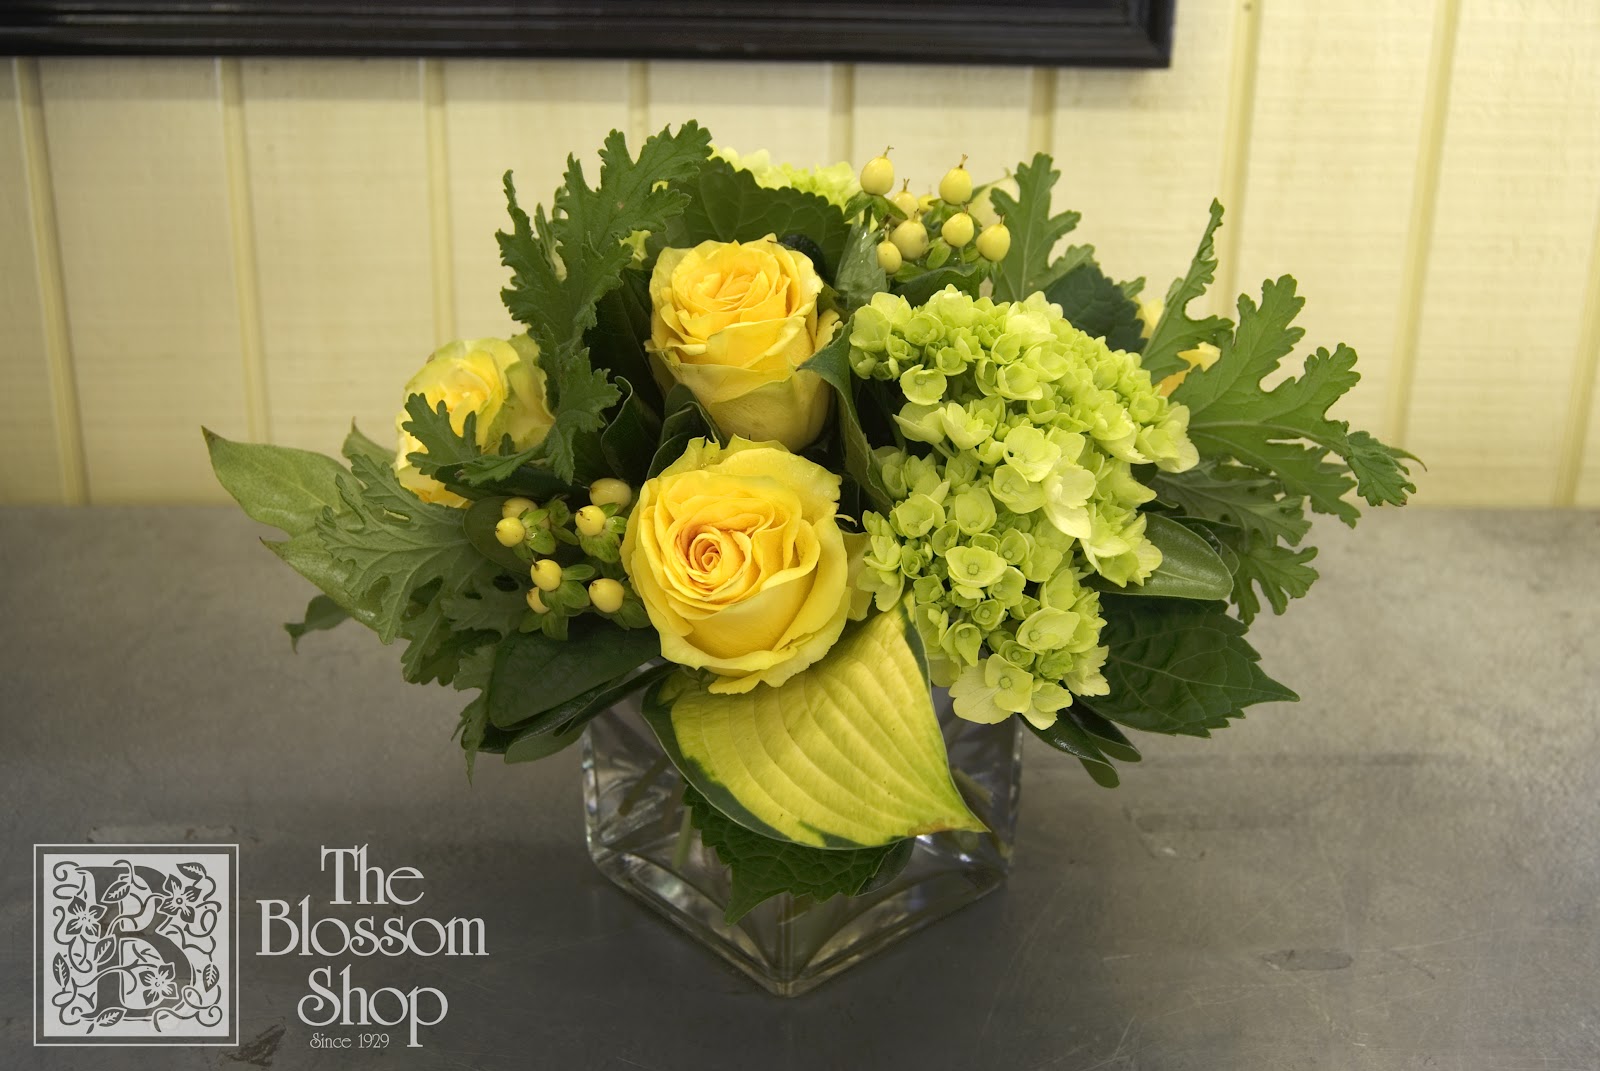 The Blossom Shop Florist: July 2012